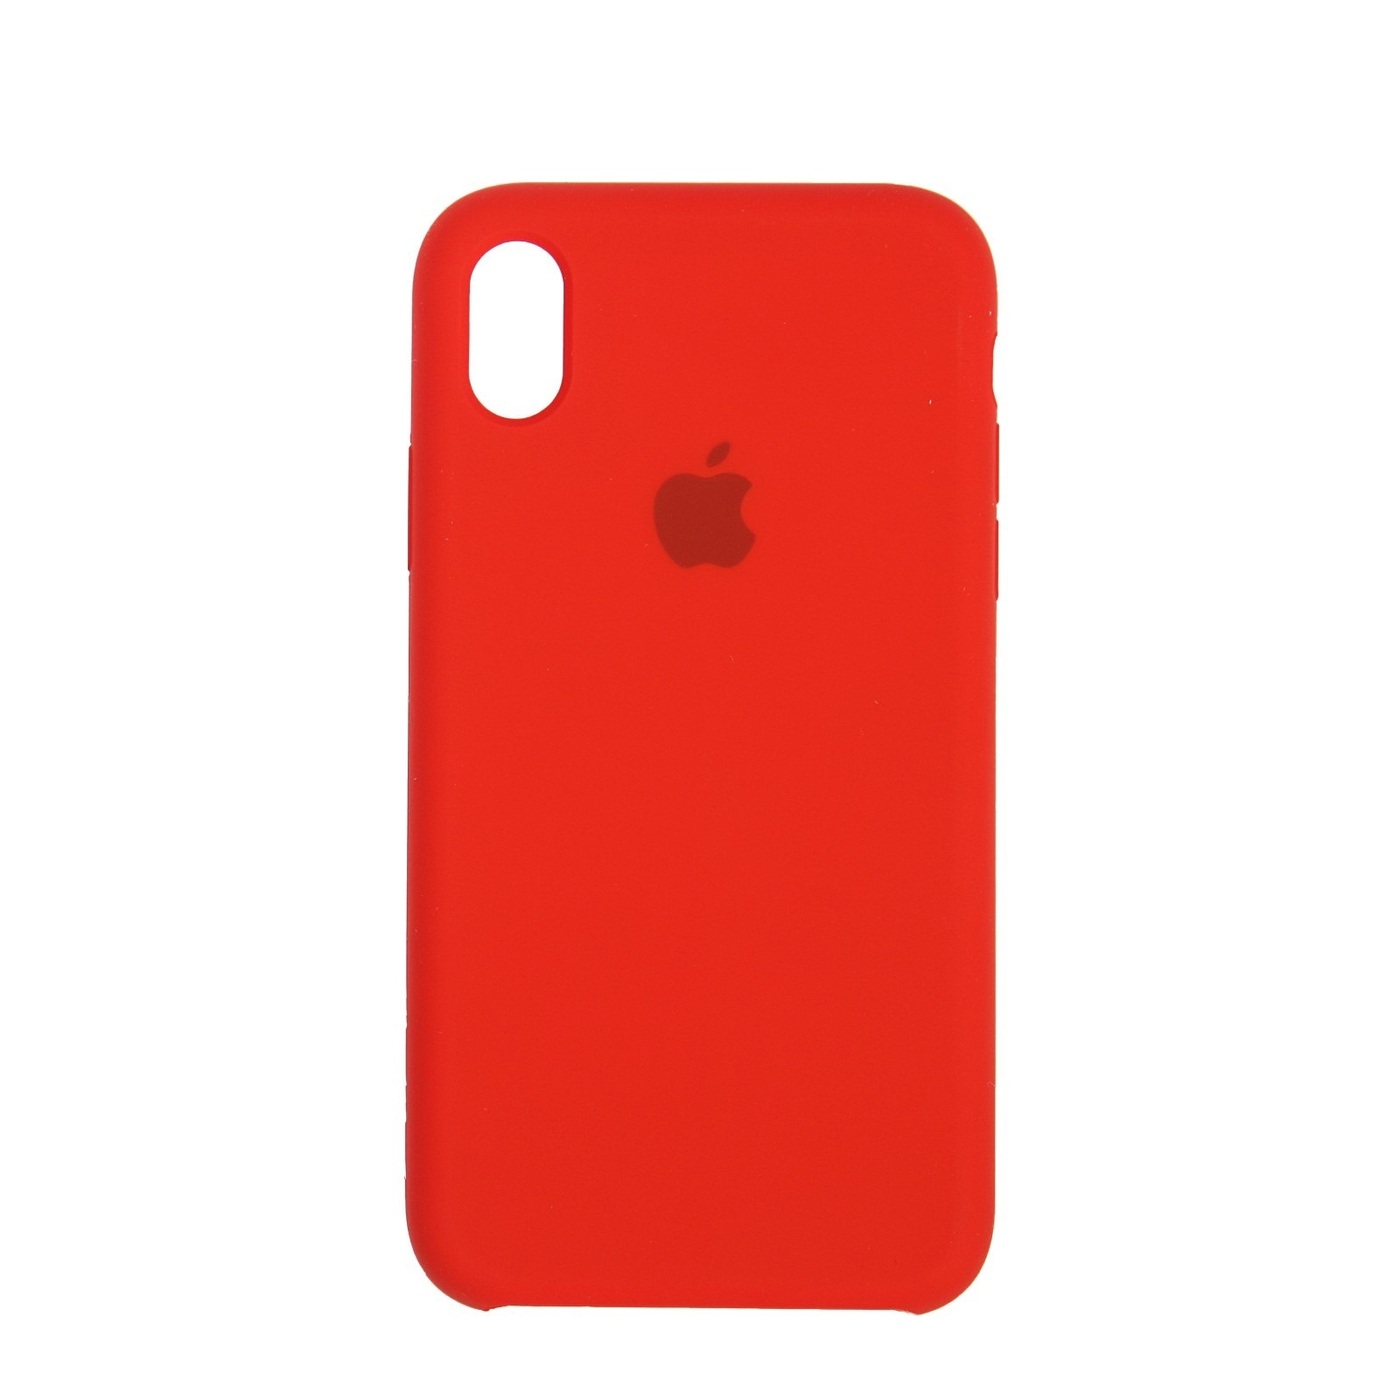 Красный чехол для телефона. Чехол Silicone Case iphone XR Red. Чехол Clear Case iphone x / XS красный. Чехол для Apple iphone XR, красный. Iphone XR красный.